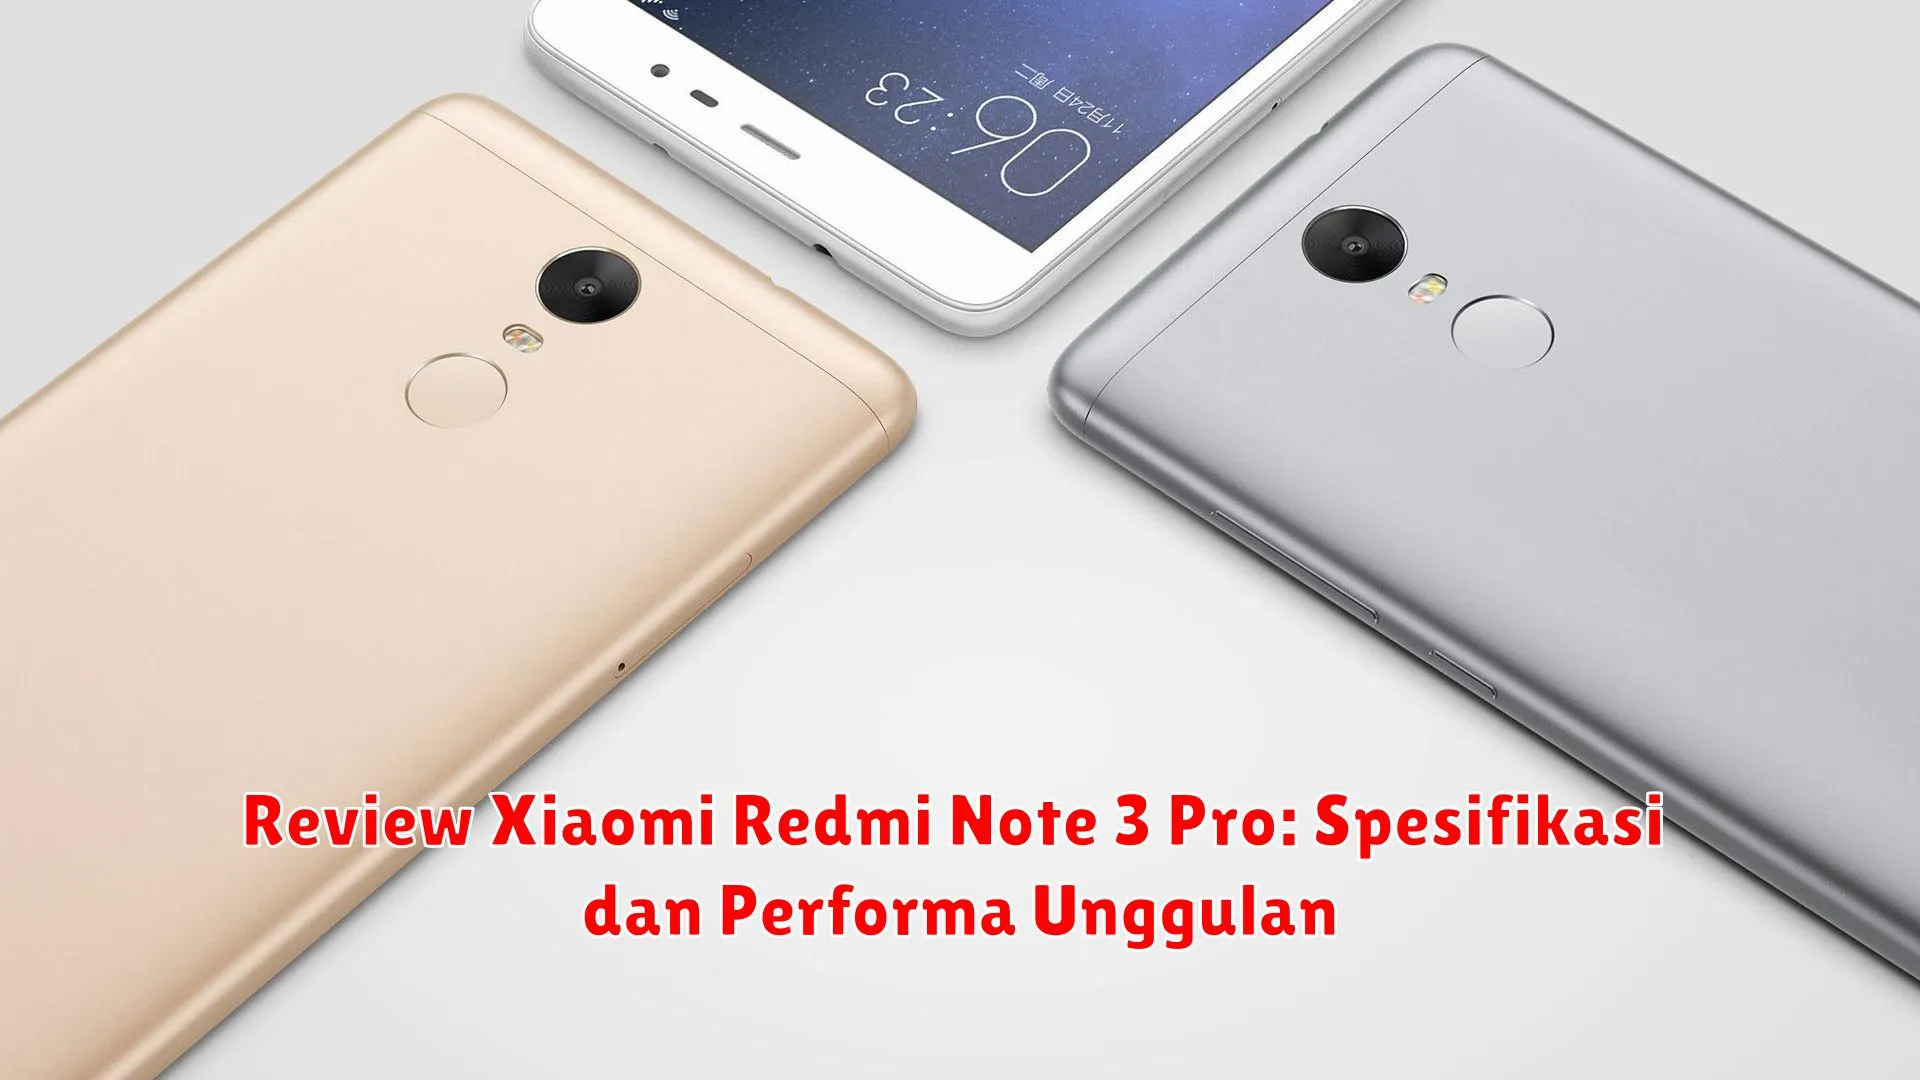 Review Xiaomi Redmi Note 3 Pro: Spesifikasi dan Performa Unggulan